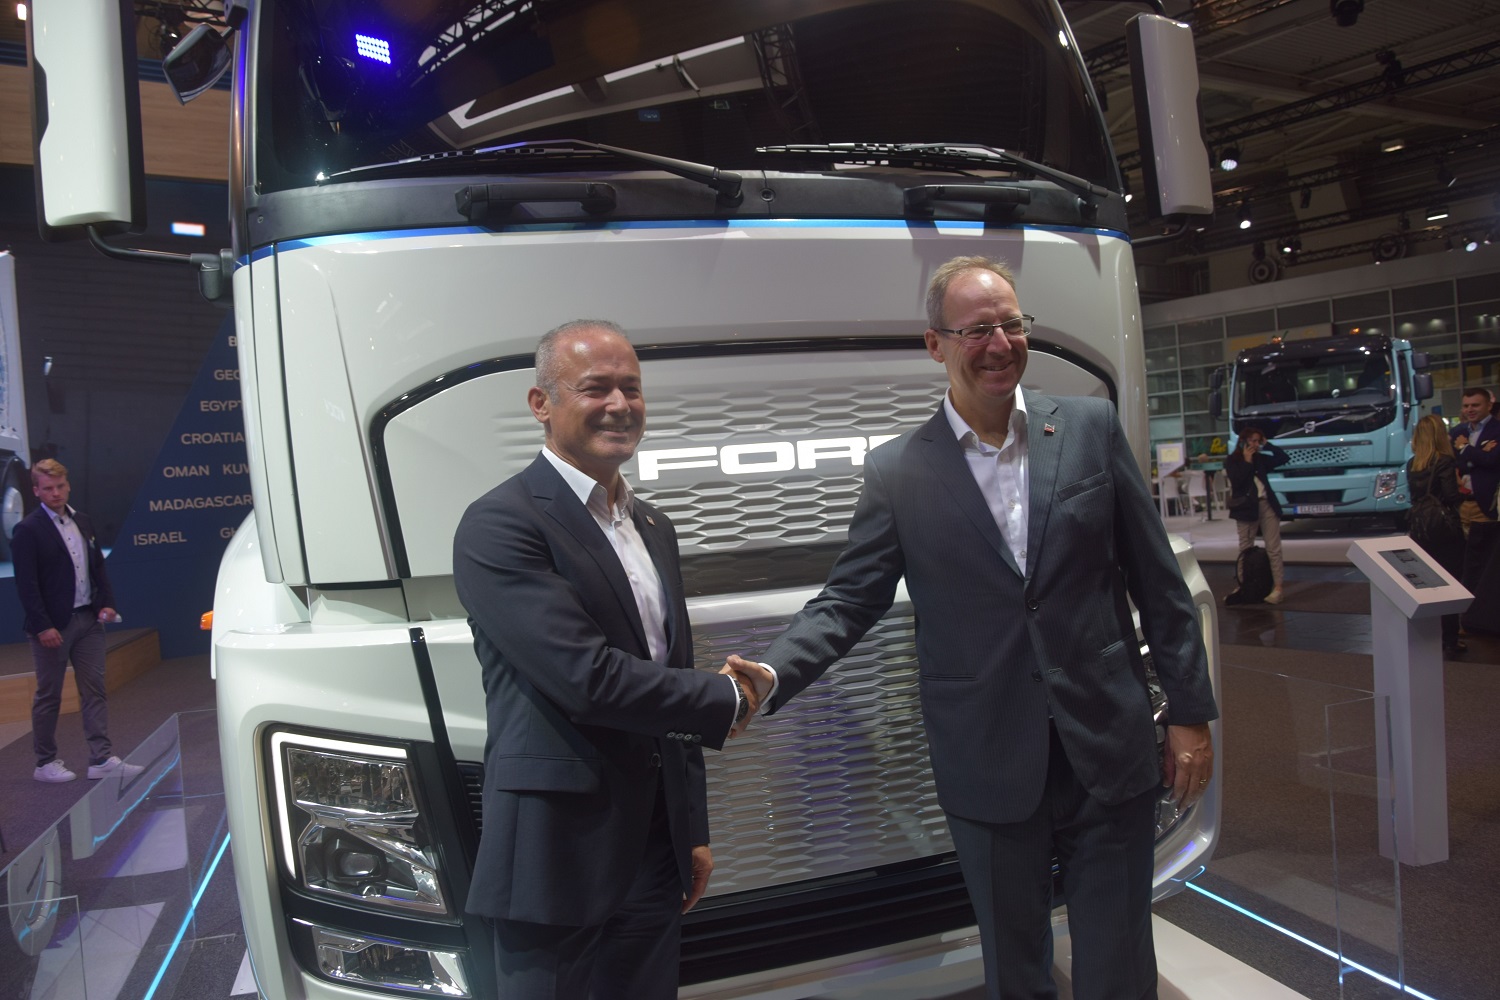 Ford Otosan %100 elektrikli kamyonunu Hannover’de tanıttı